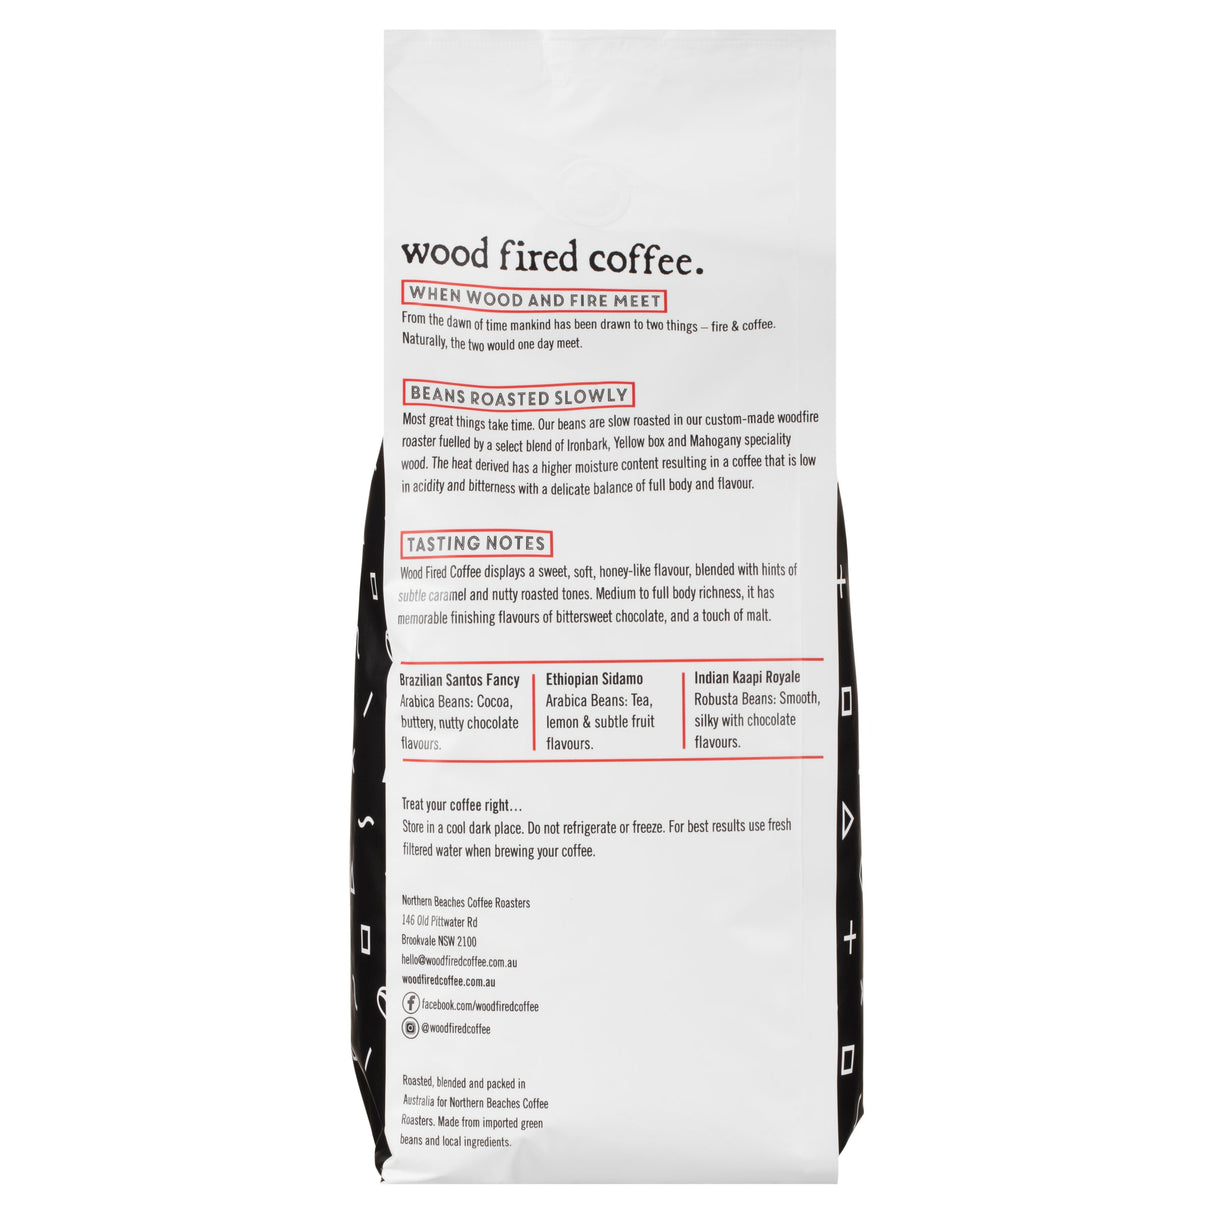 Wood Fired Coffee Beans - 1kg Bag